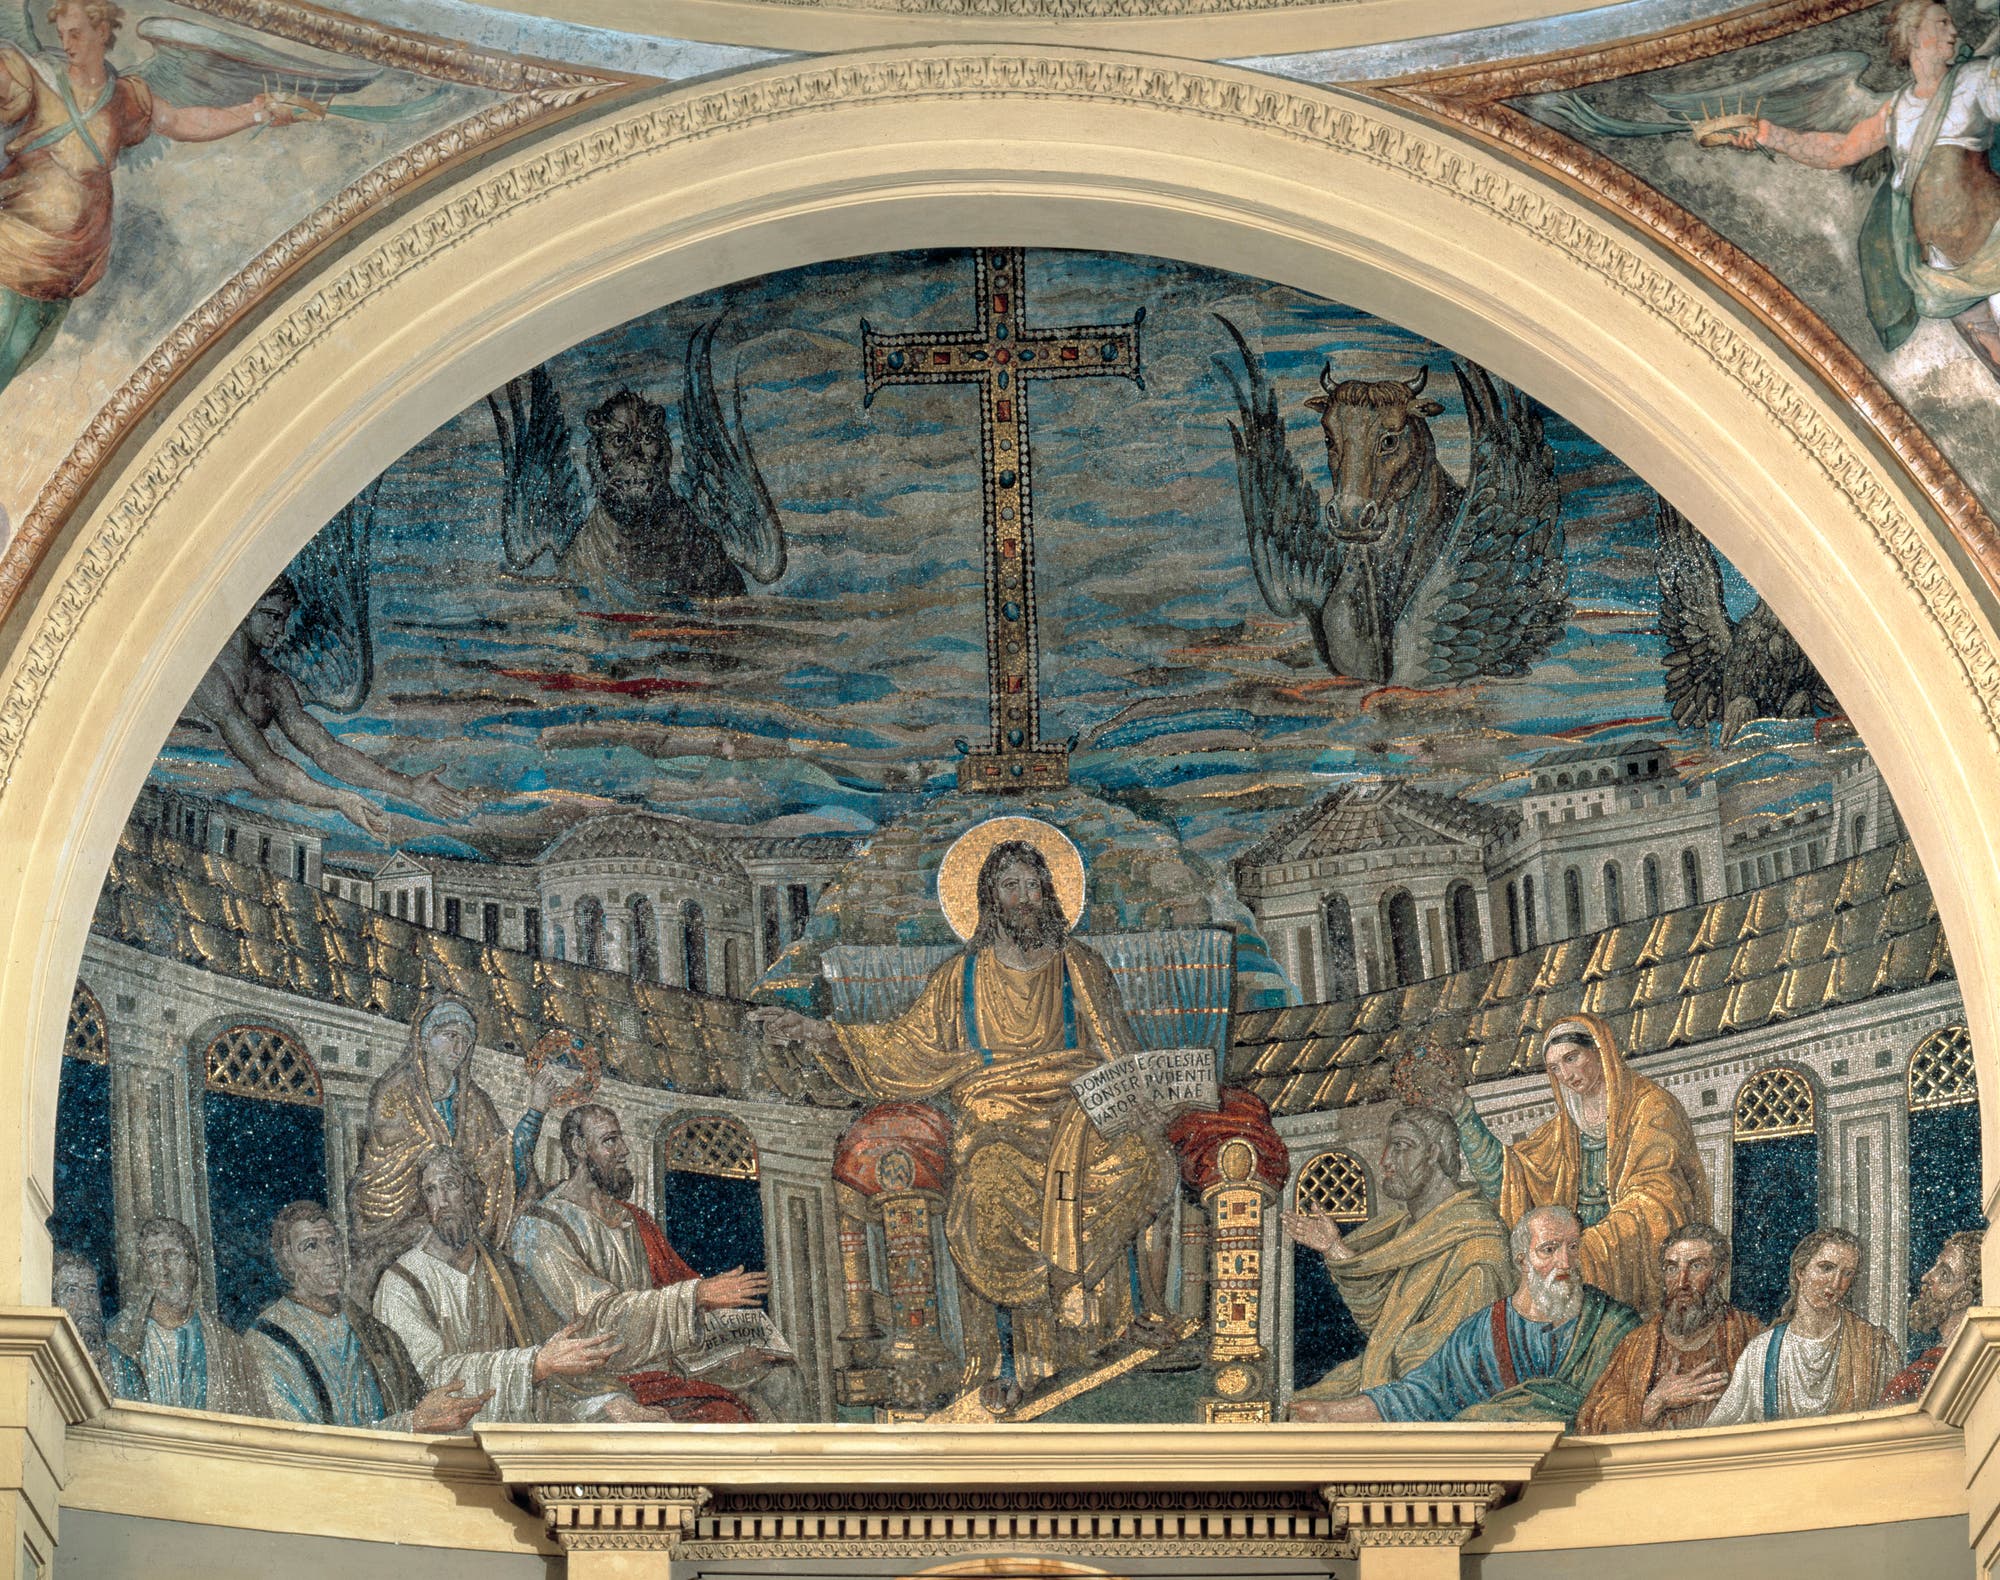 Apsismosaik in der Kirche Santa Pudenziana in Rom.